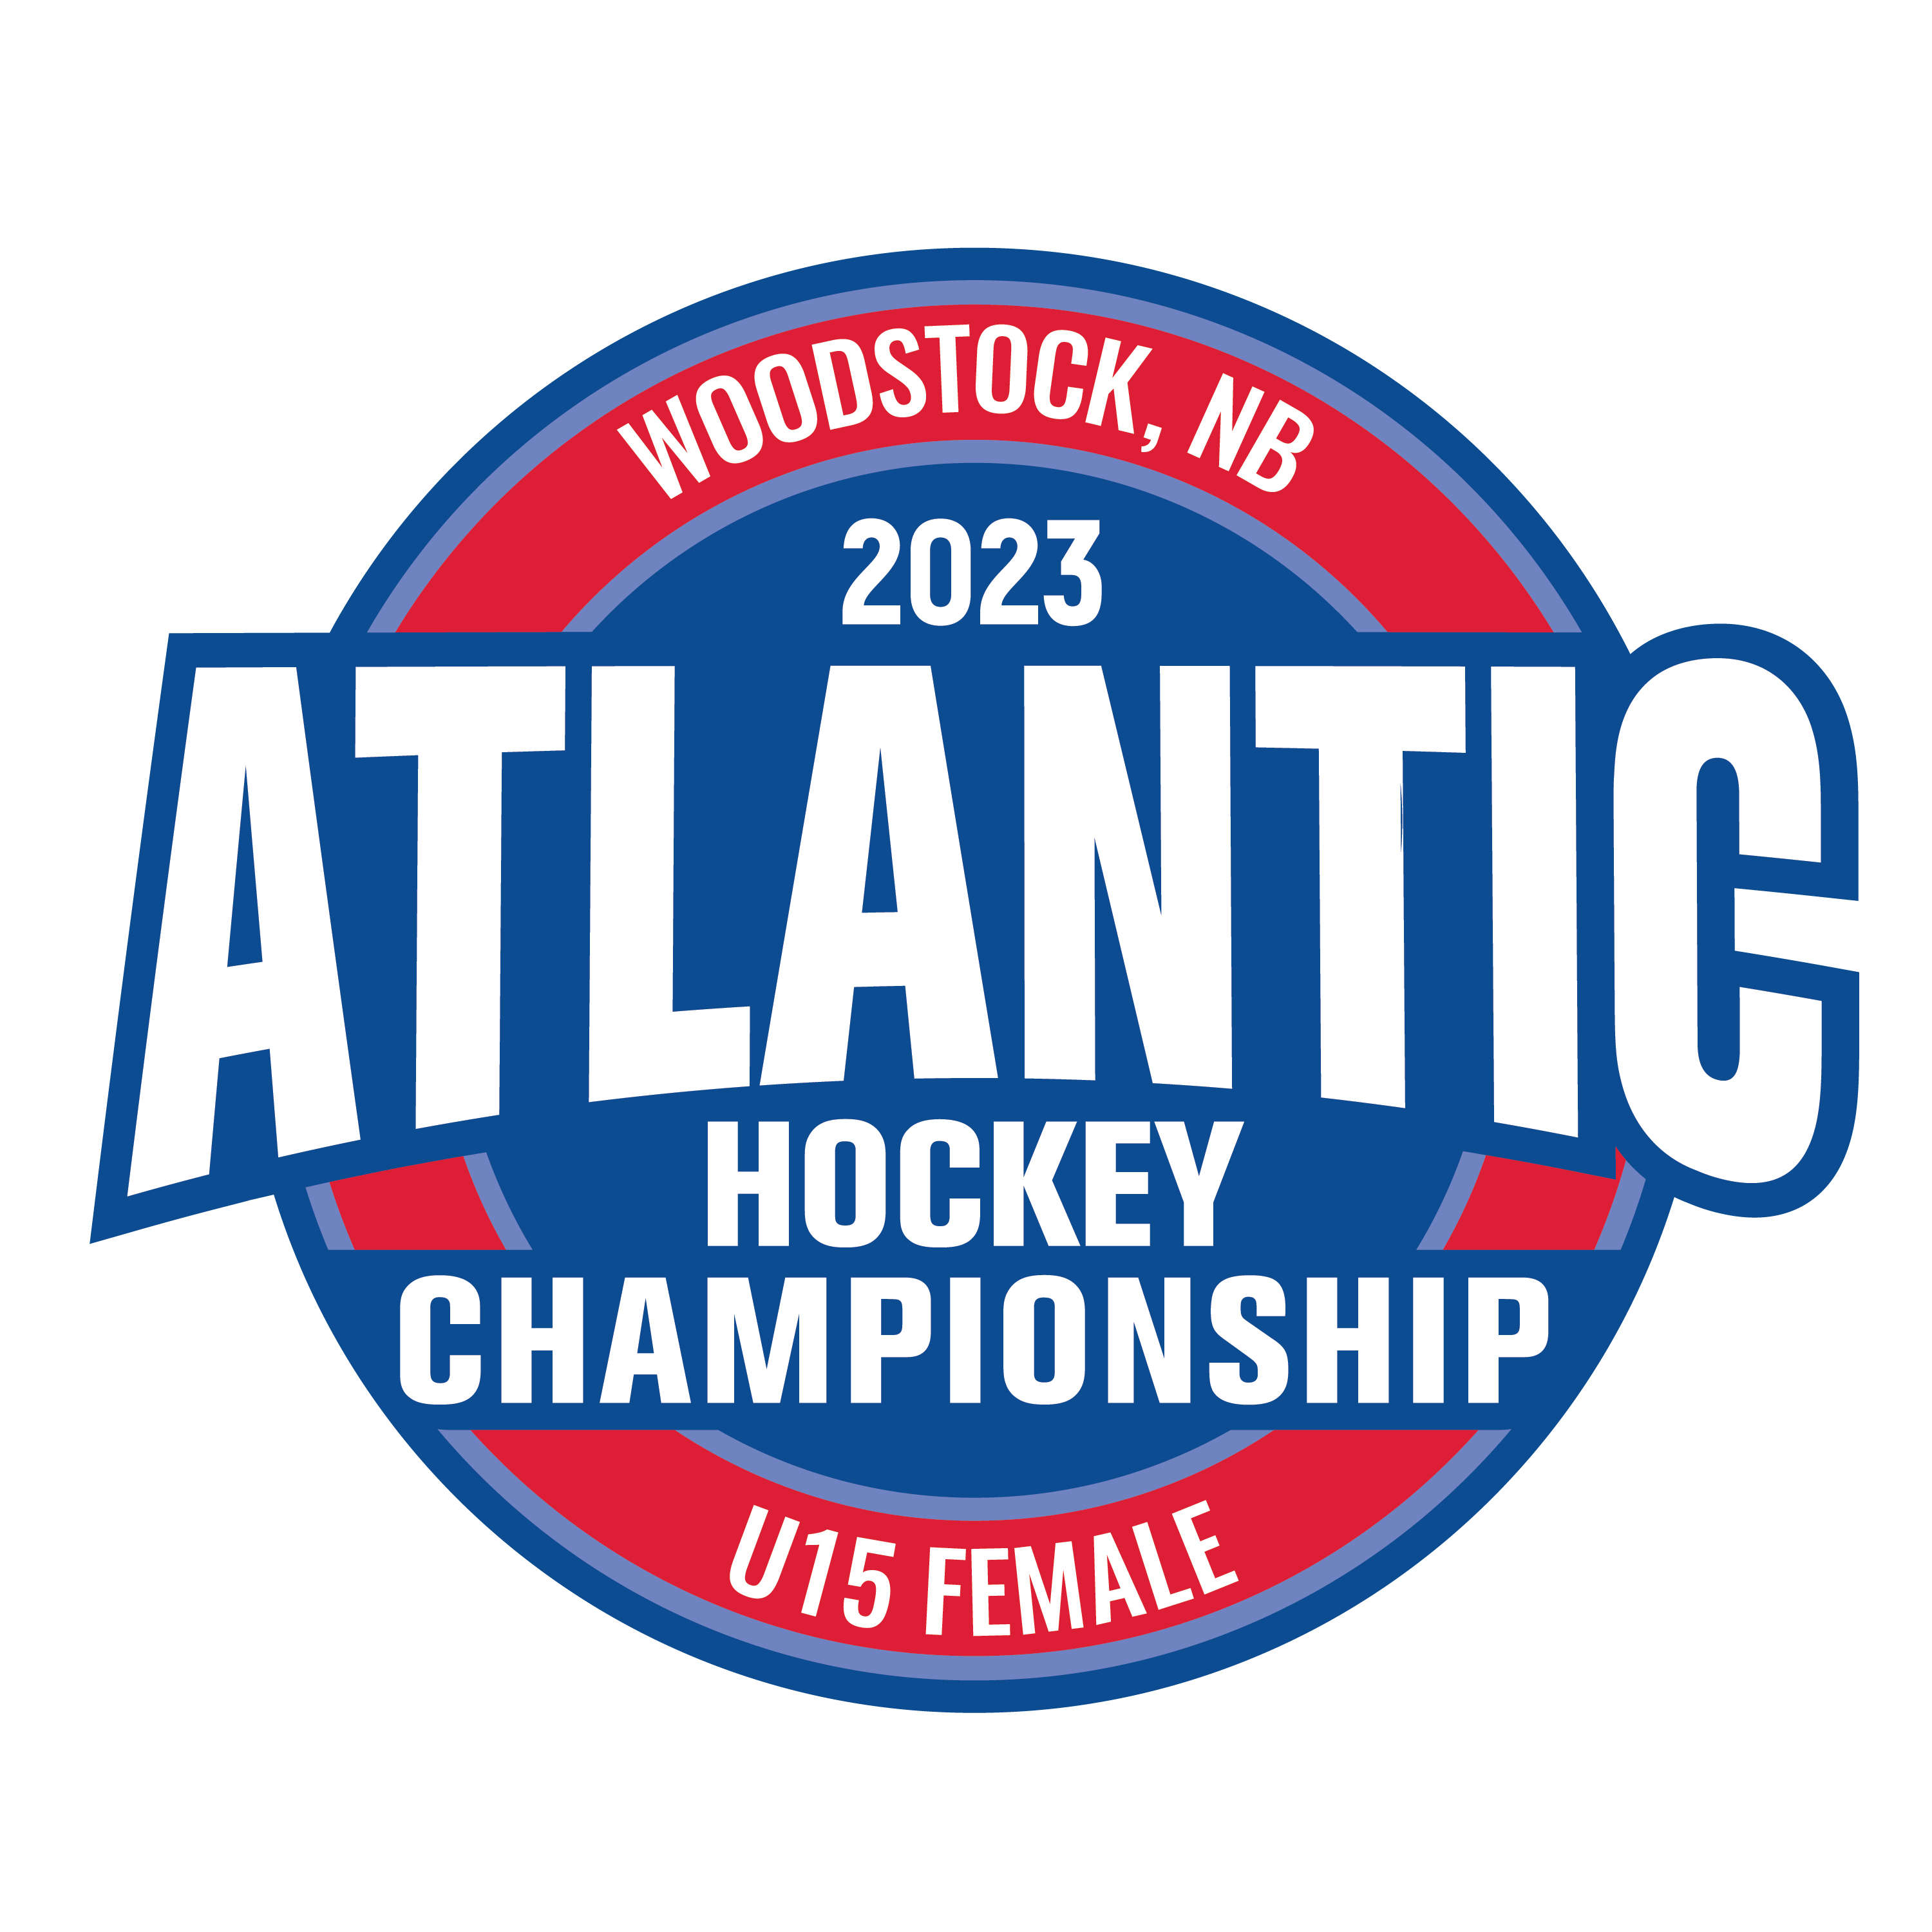 Under 15 Female Atlantic Championships to be held in Woodstock, NB